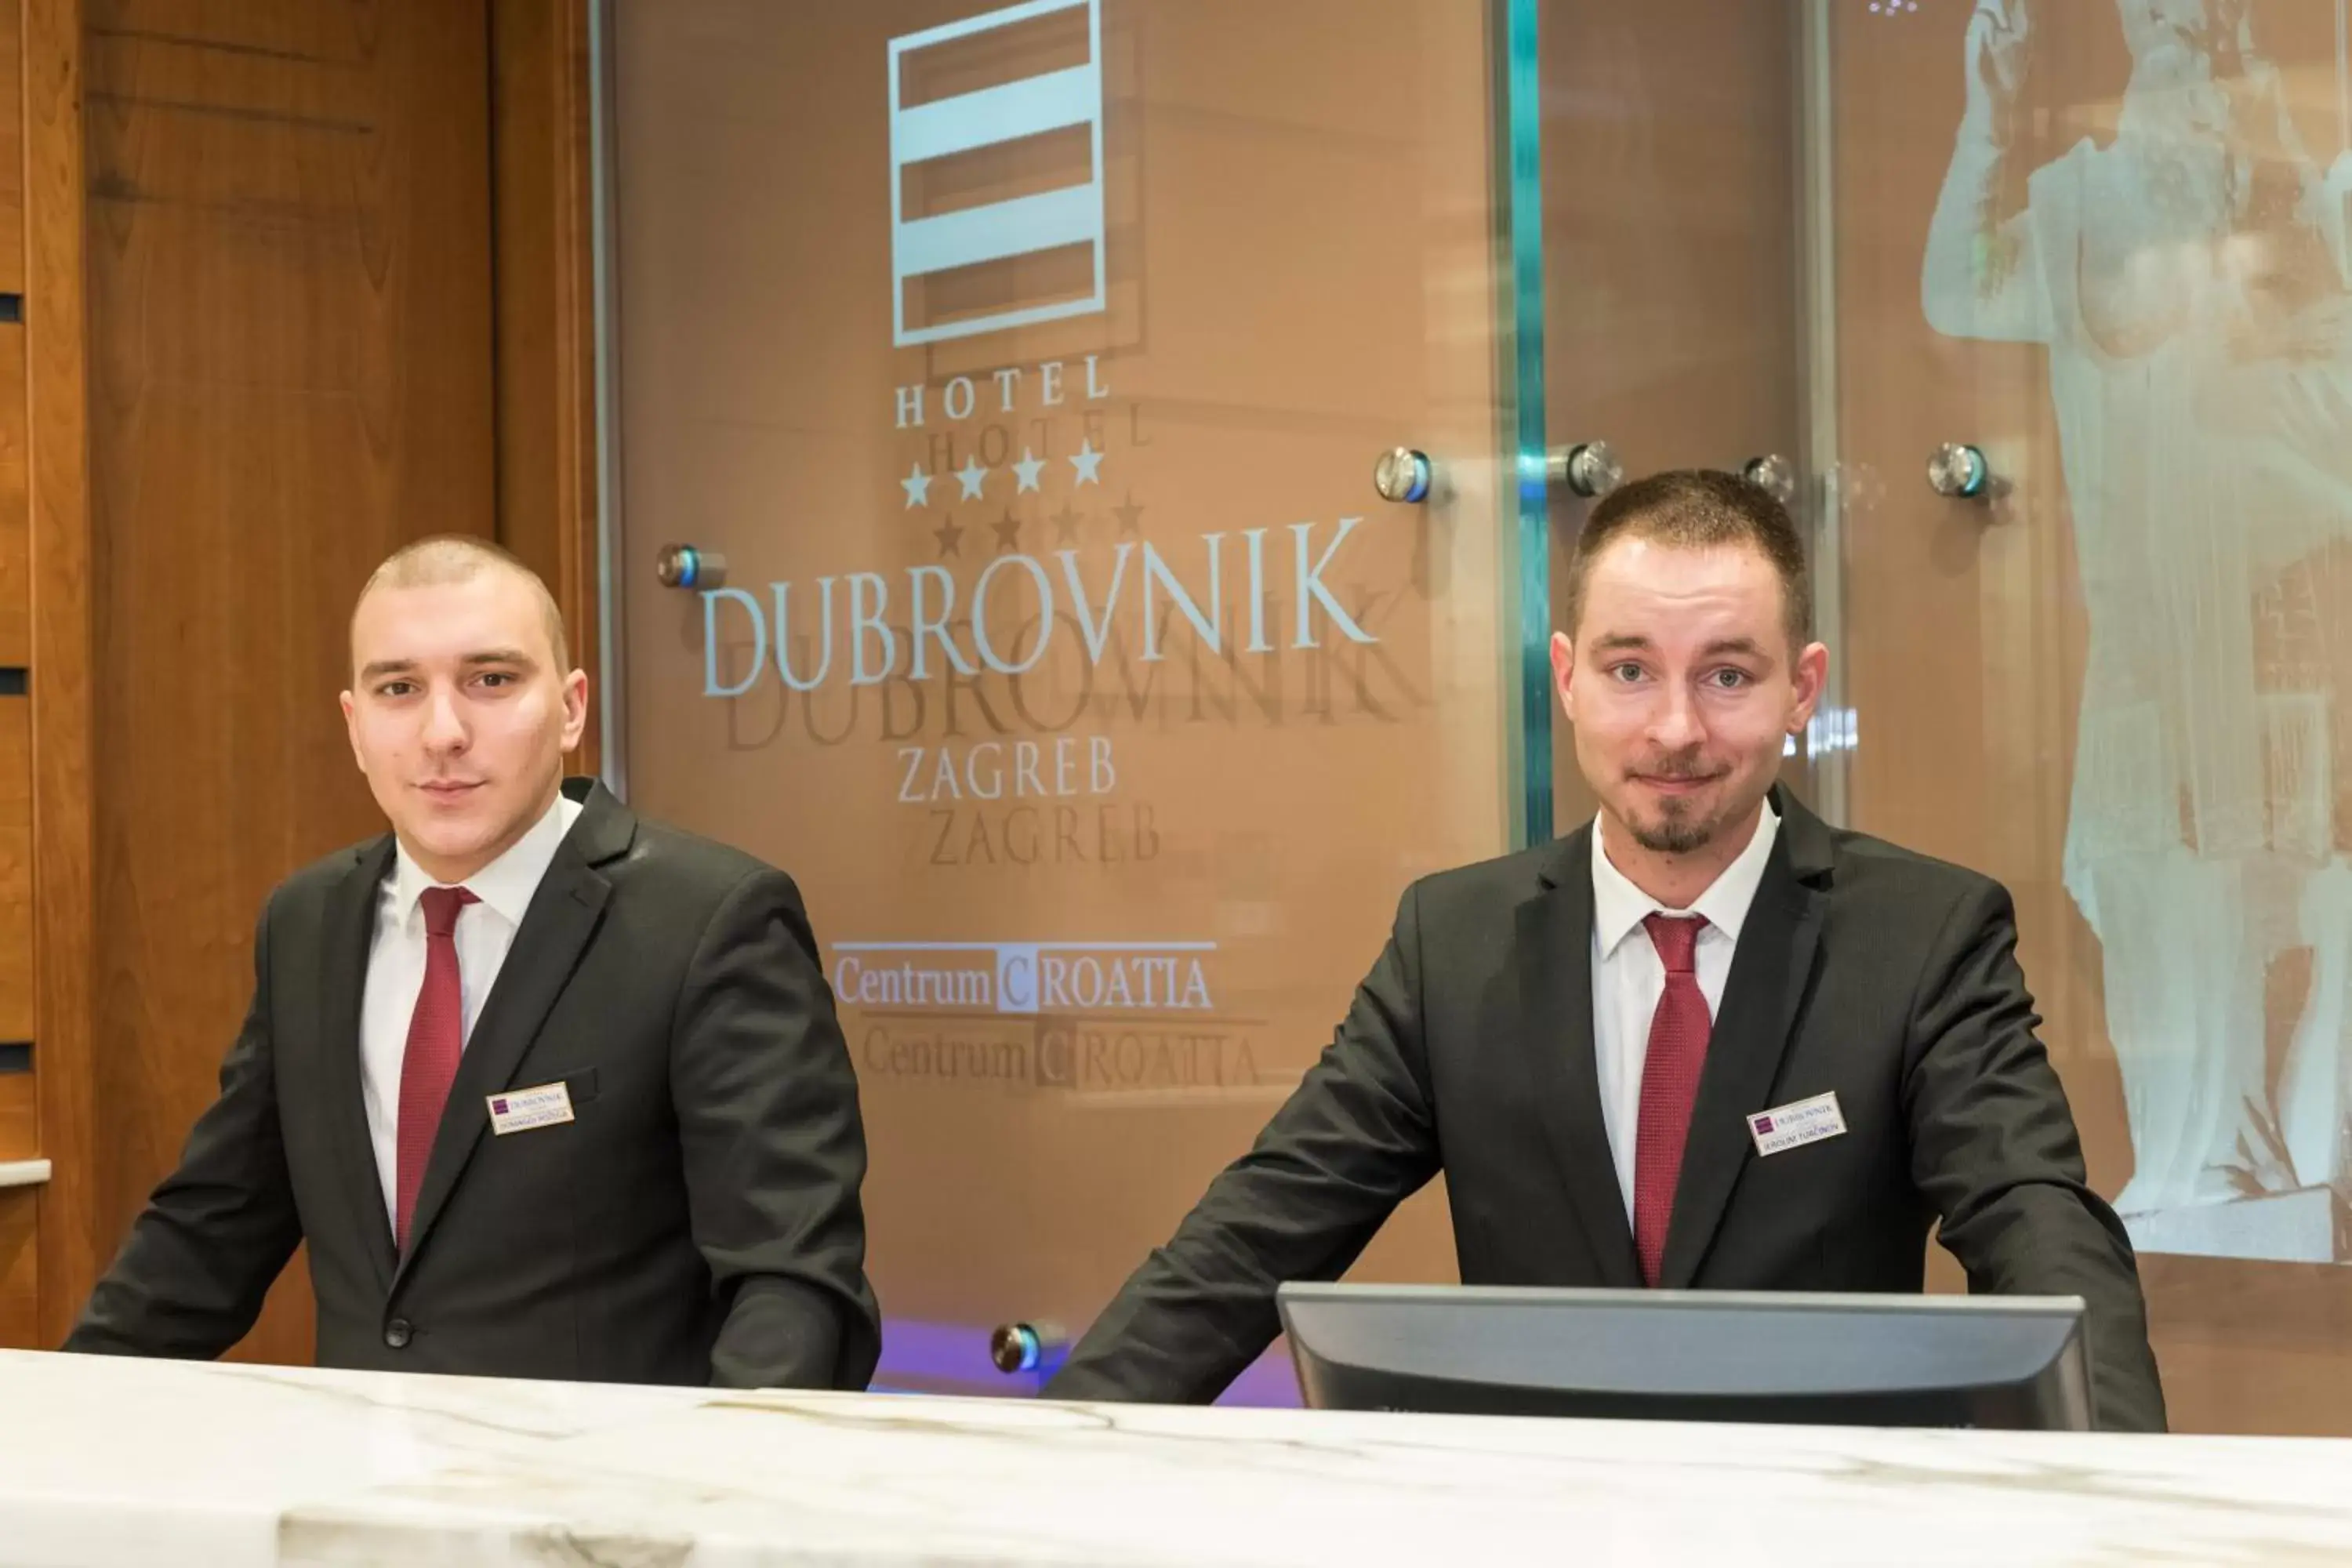 Lobby or reception in Hotel Dubrovnik